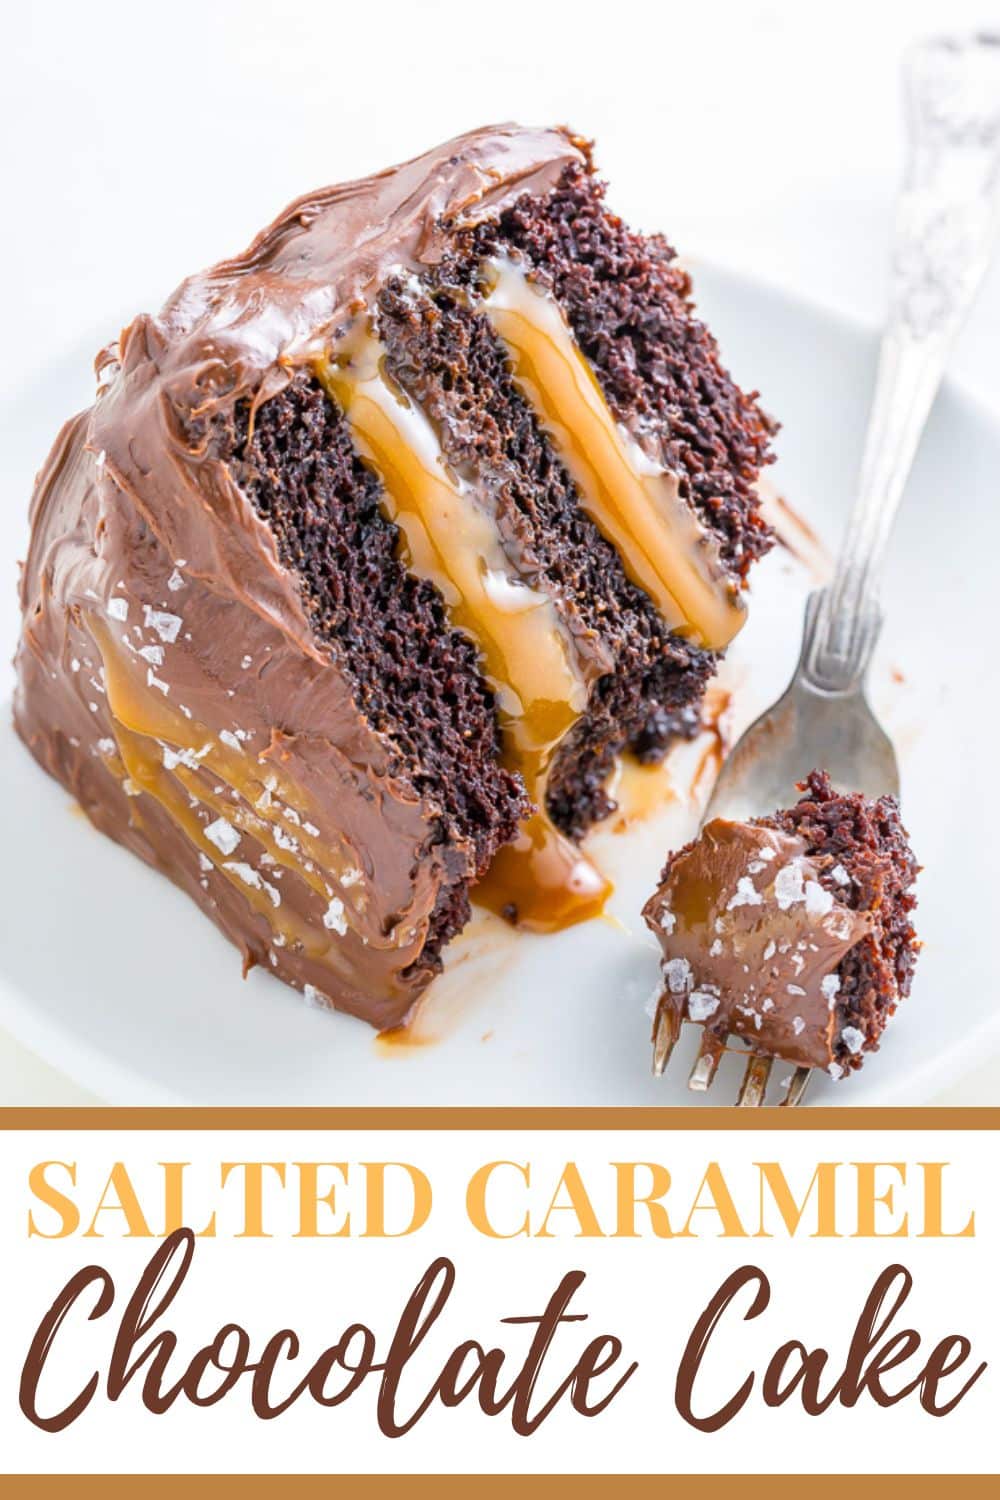 Giant Caramel Candy Bar Cake Recipe by Tasty